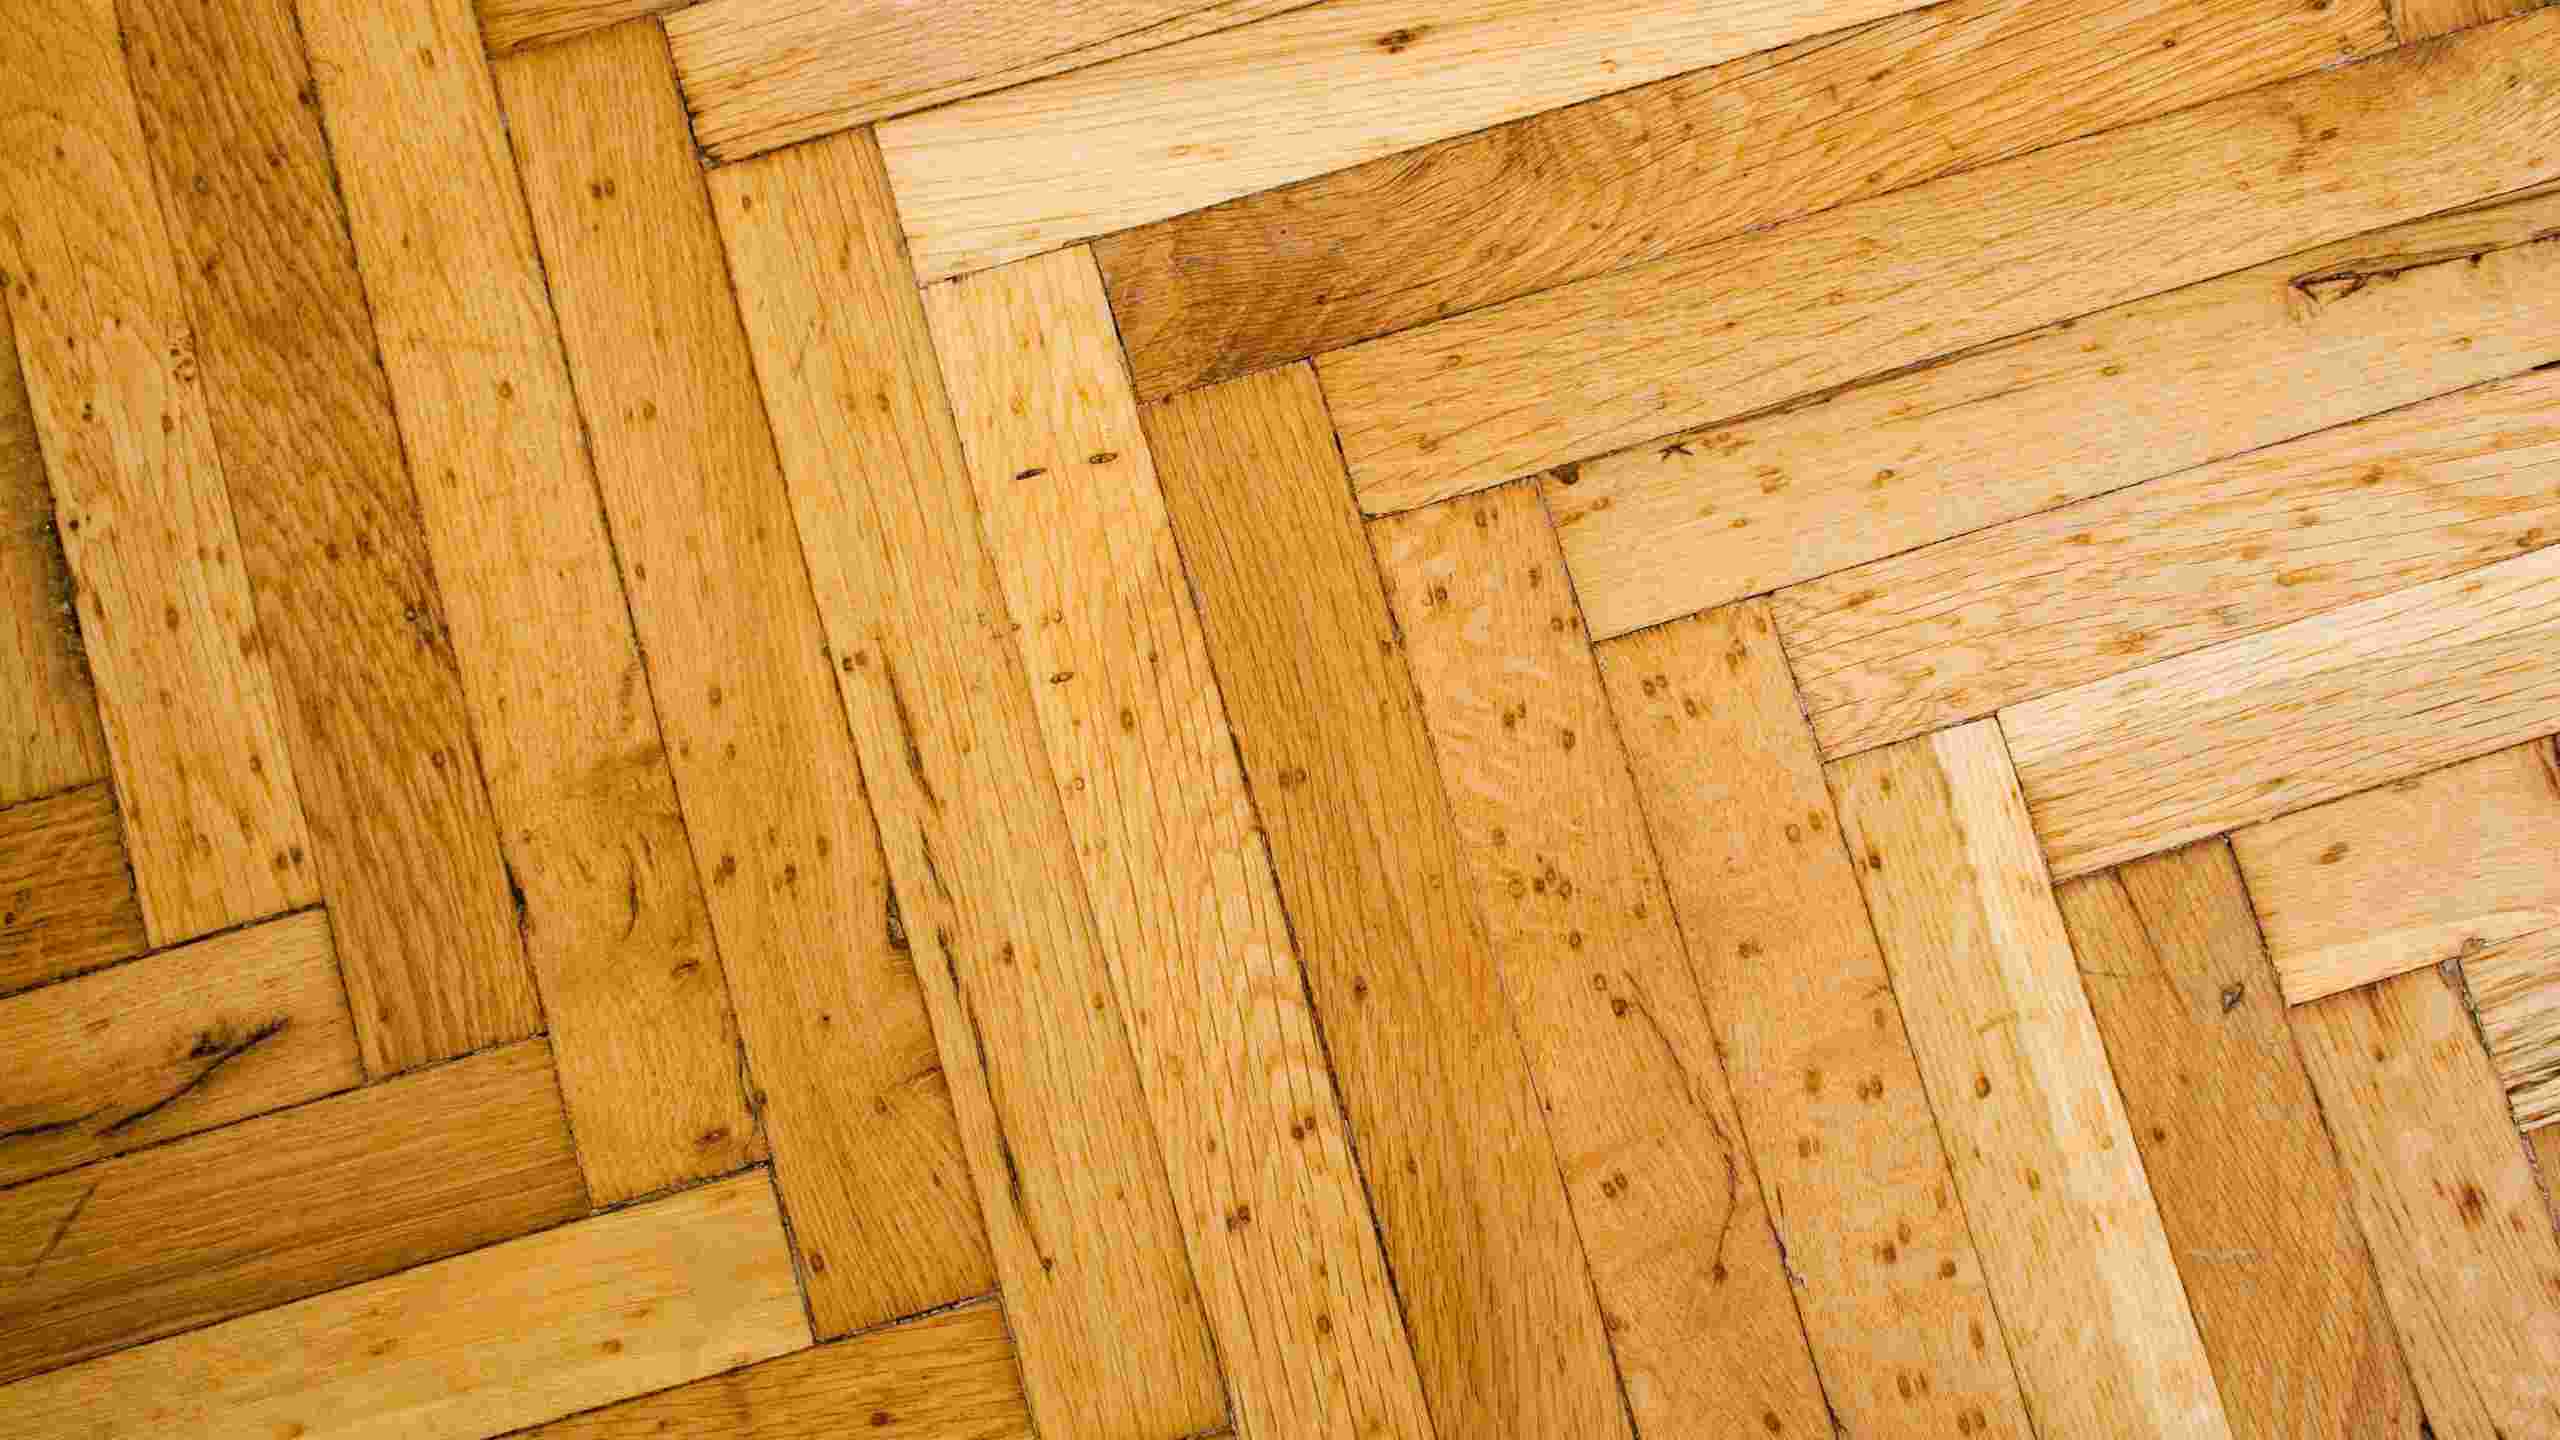 Heat treated wood for wood floor